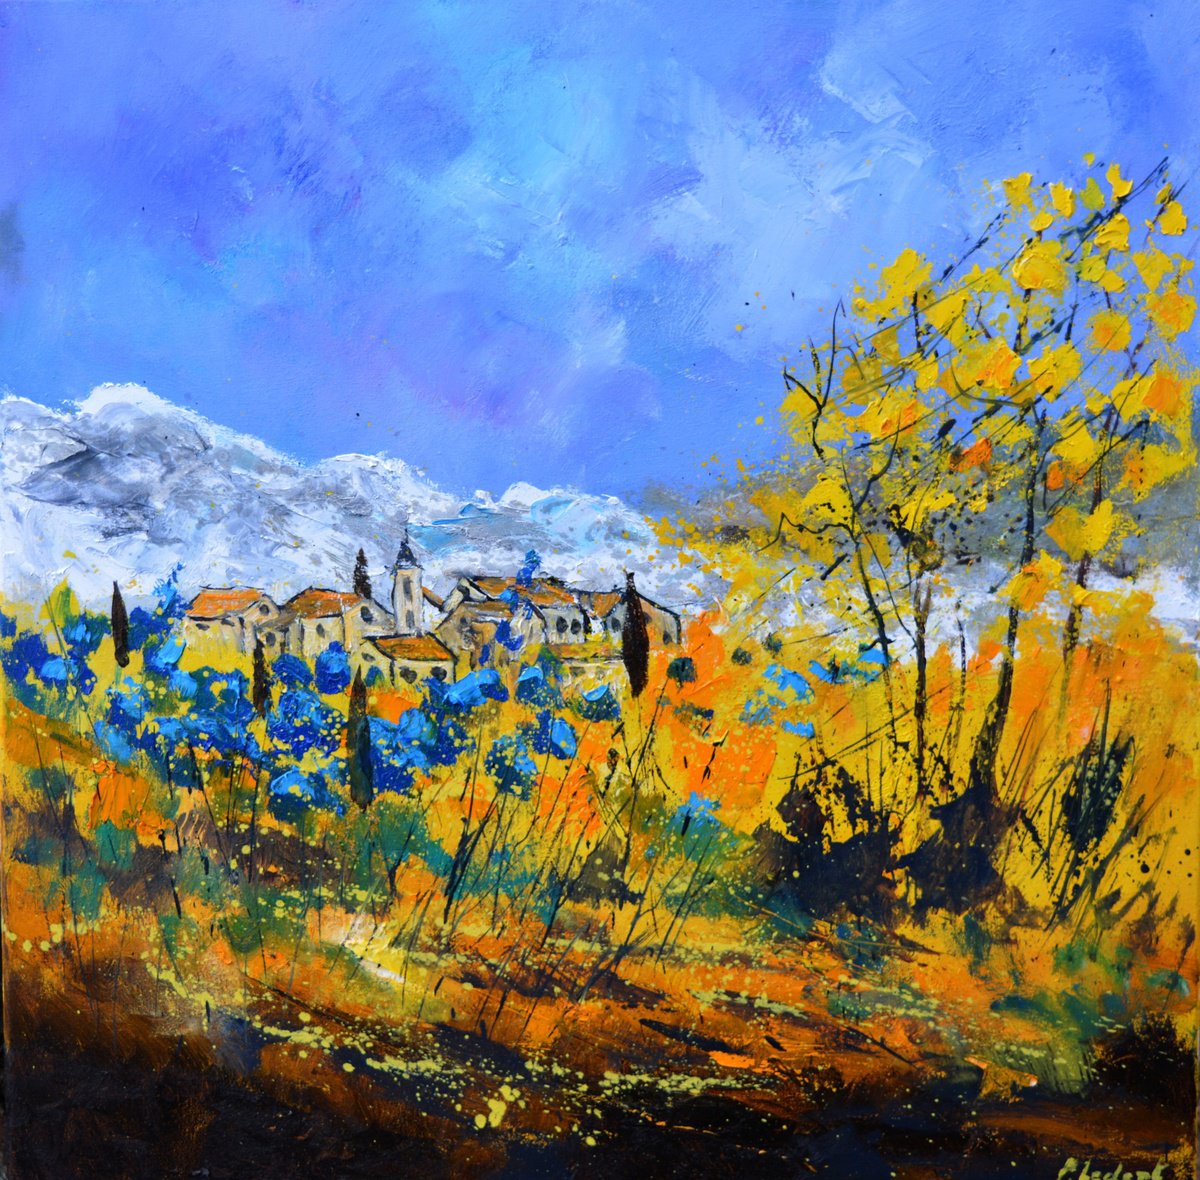 Blue flowers in Provence by Pol Henry Ledent